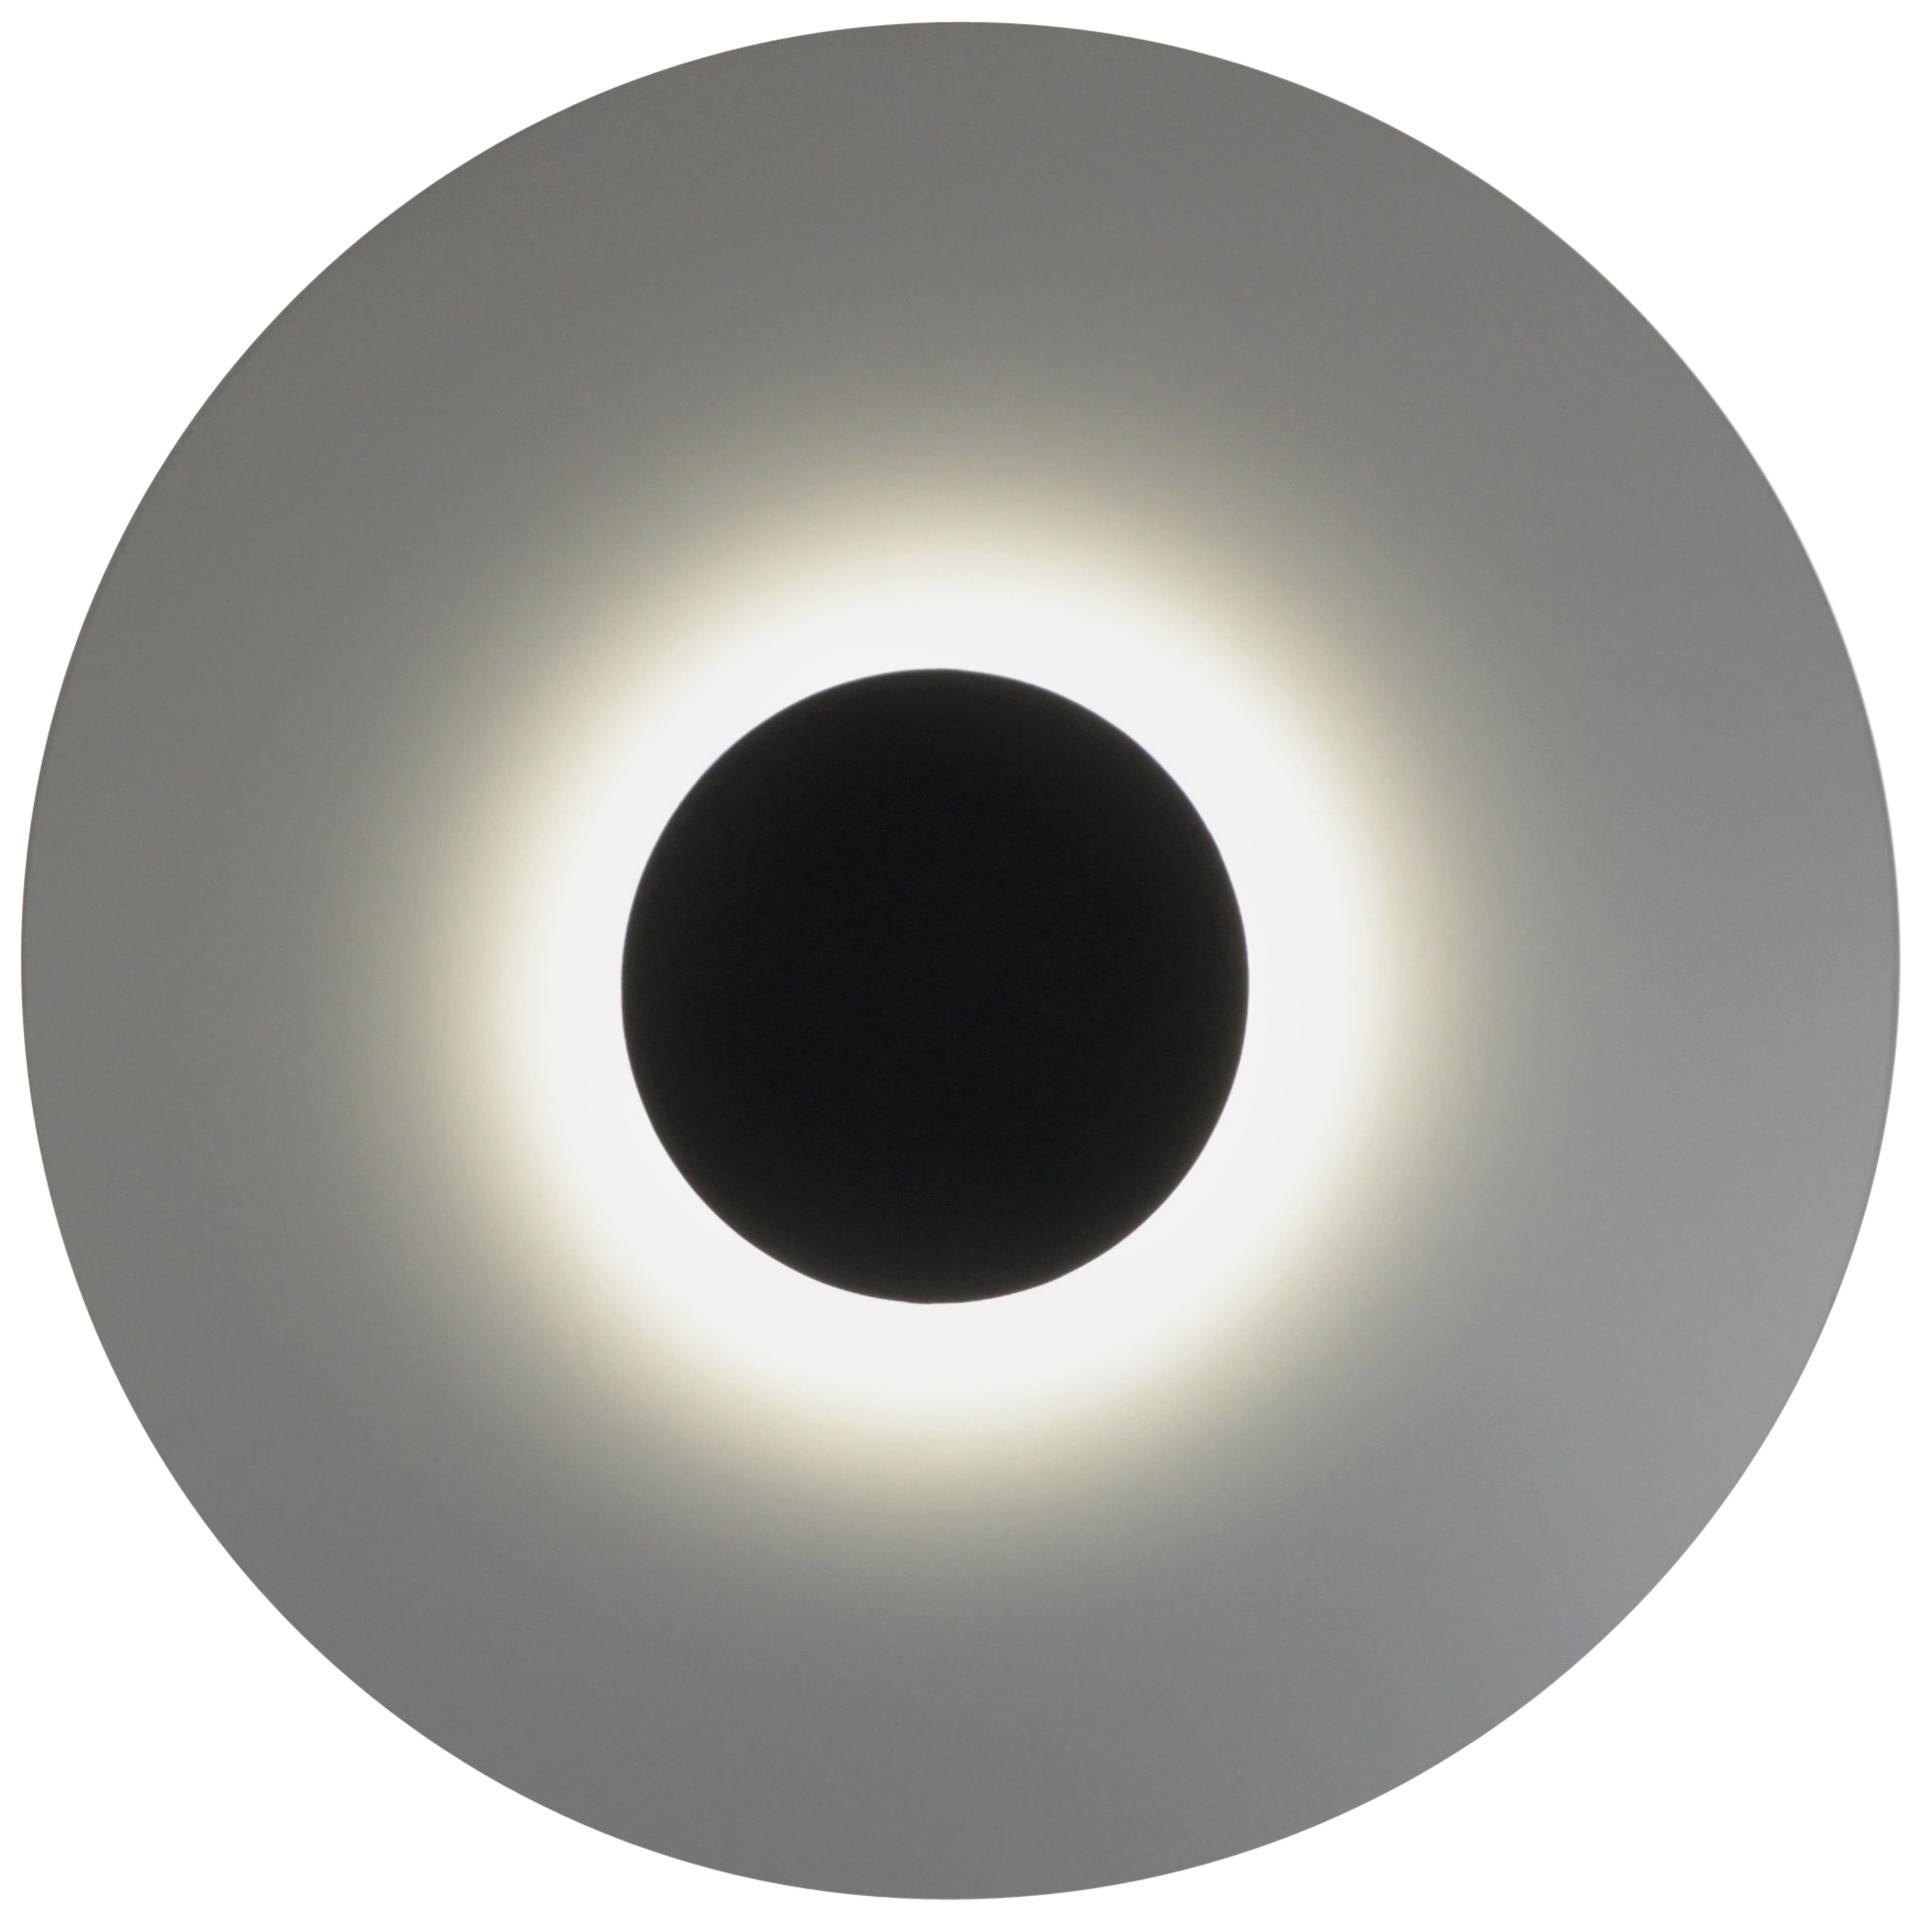 Applique Eclipse d'Arturo Erbsman